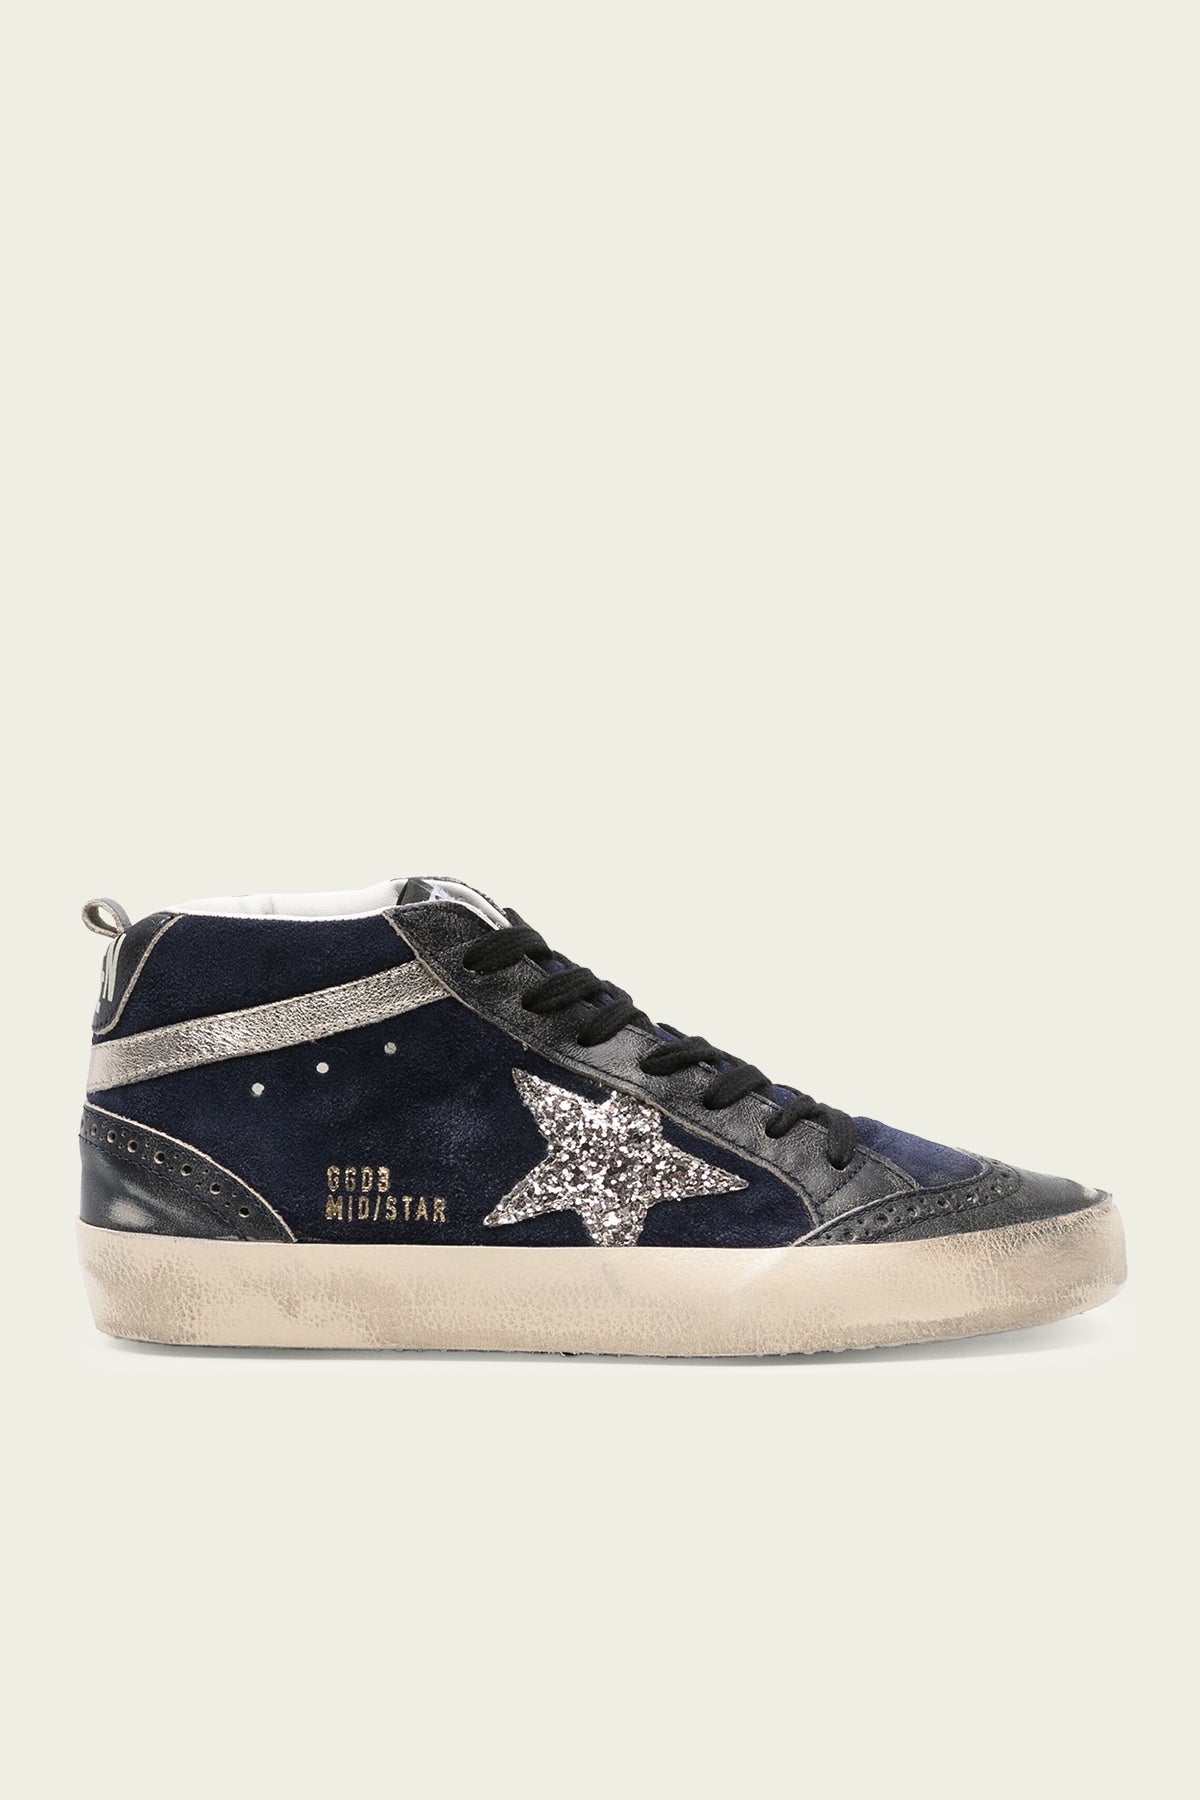 Mid-Star Medieval Blue Glitter Star Leather Sneaker - shop-olivia.com